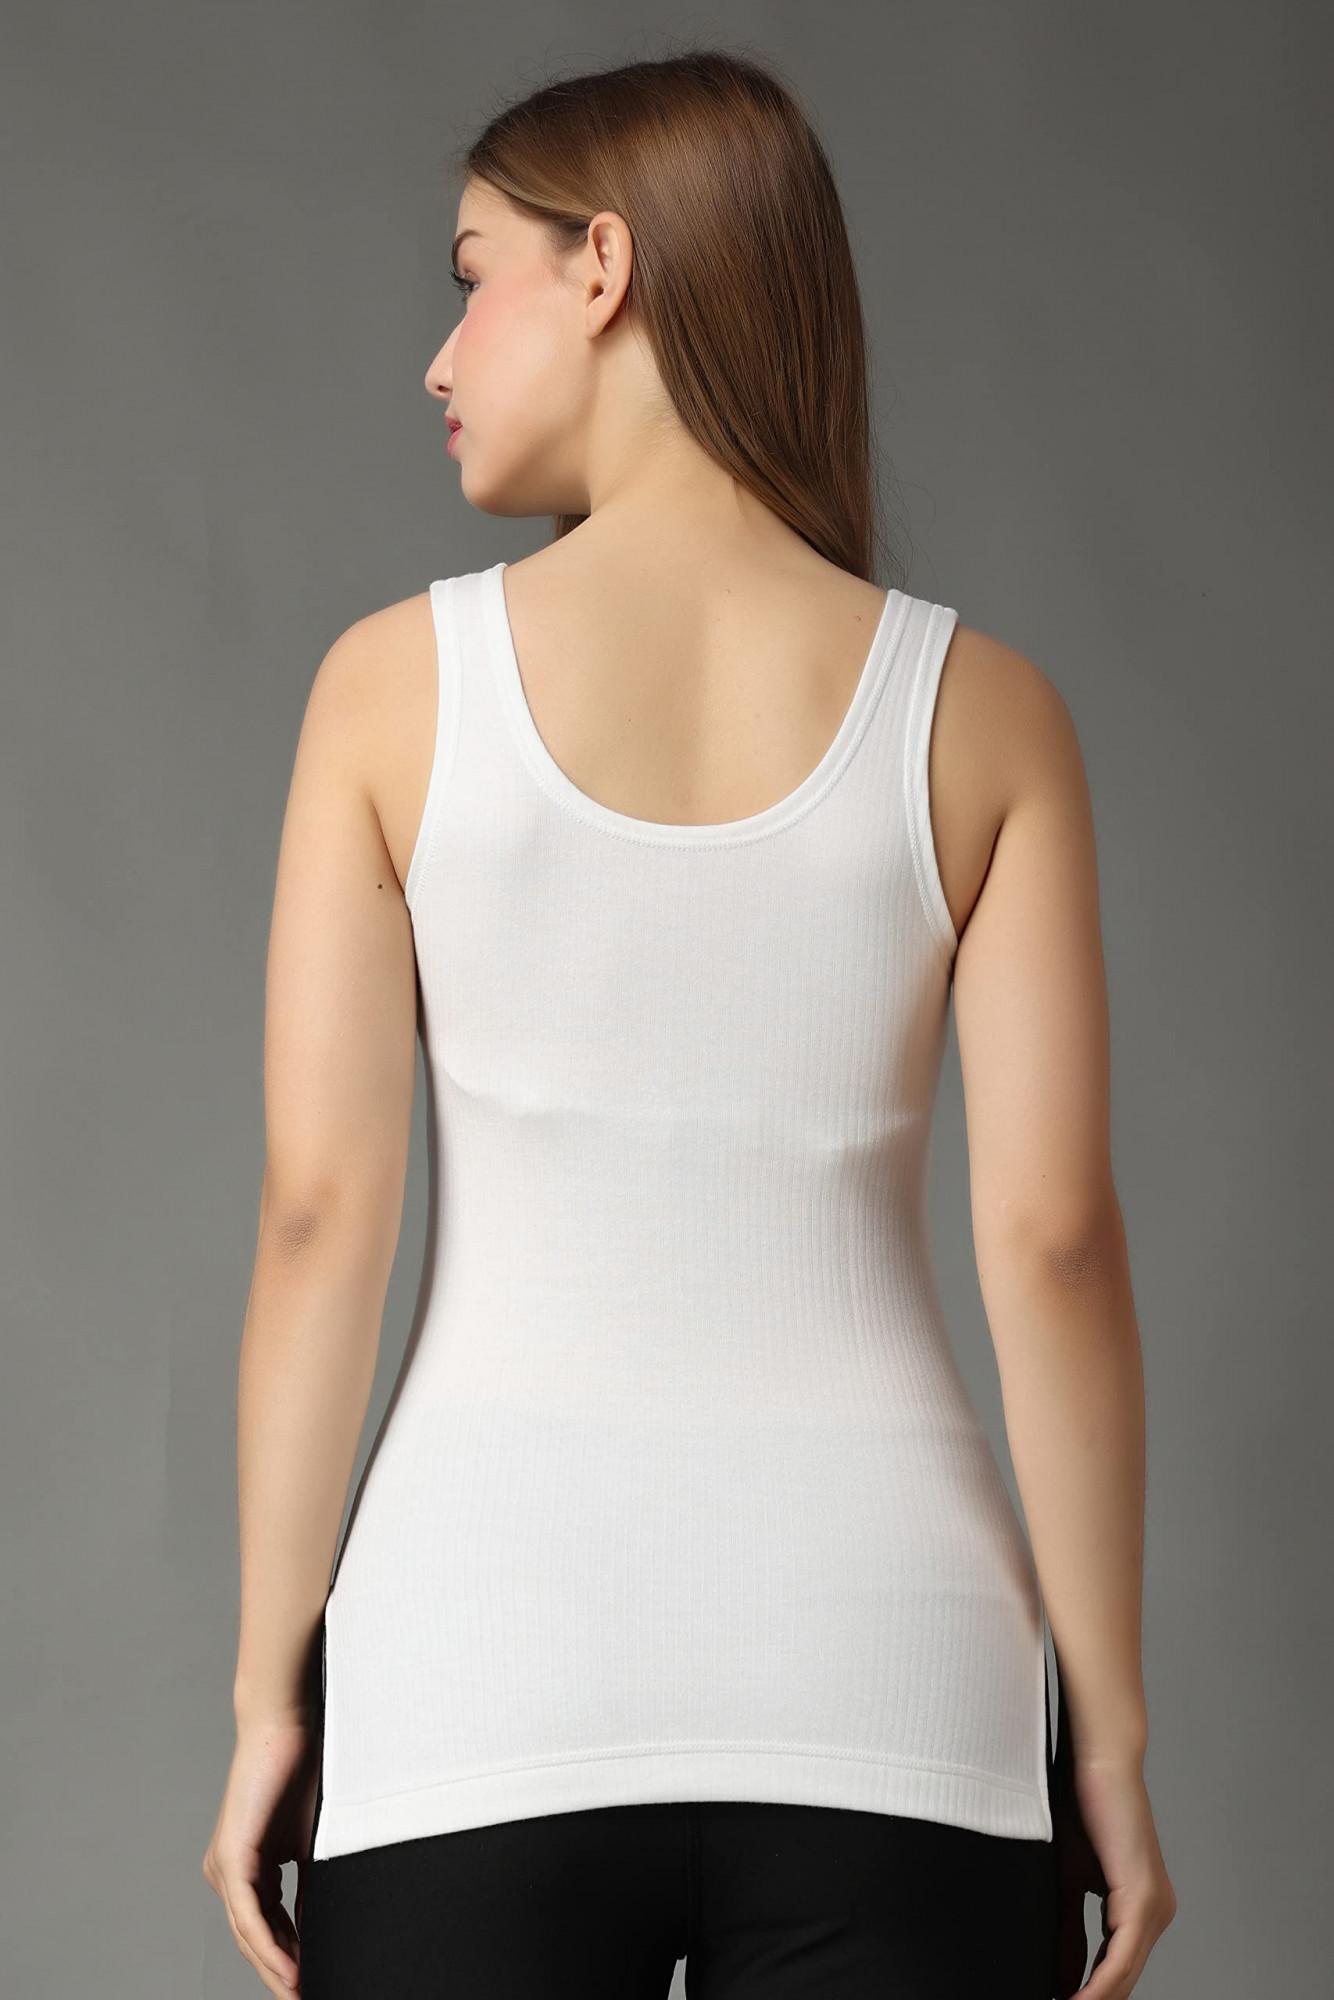 Wearslim® Premium Cotton Quilted Thermal Scoop Neck Camisole, Ultra Soft  Sleeveless Underwear Tank Top for Women - White (2XL),Size 2XL